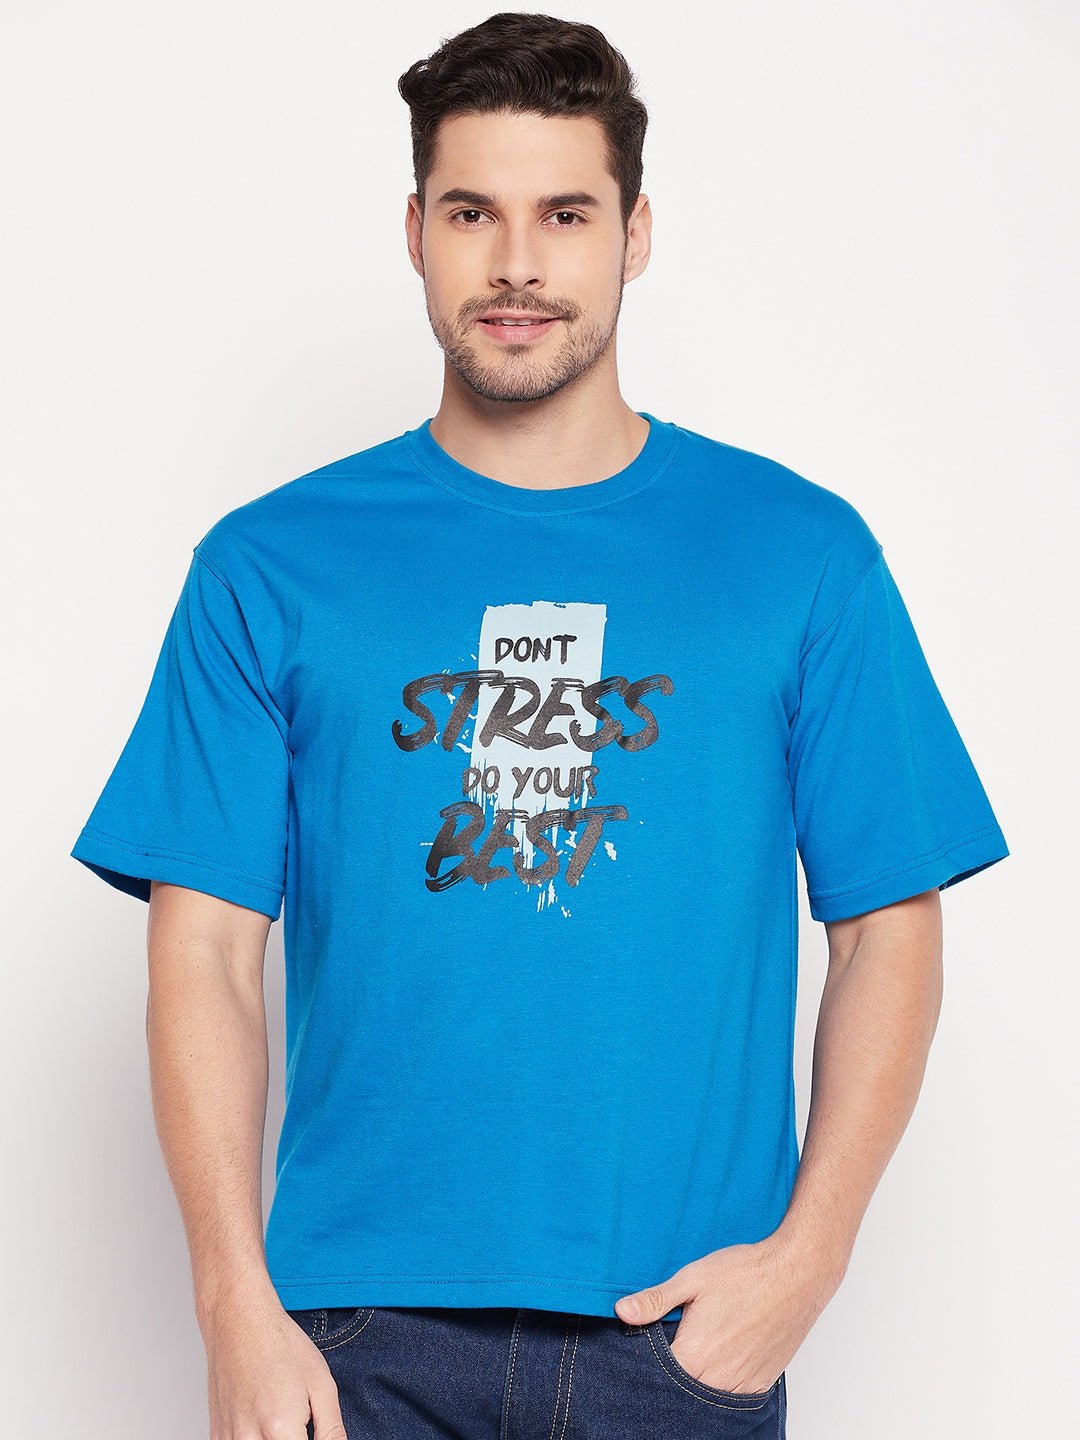 Teal Blue Round Neck T-shirt - clubyork